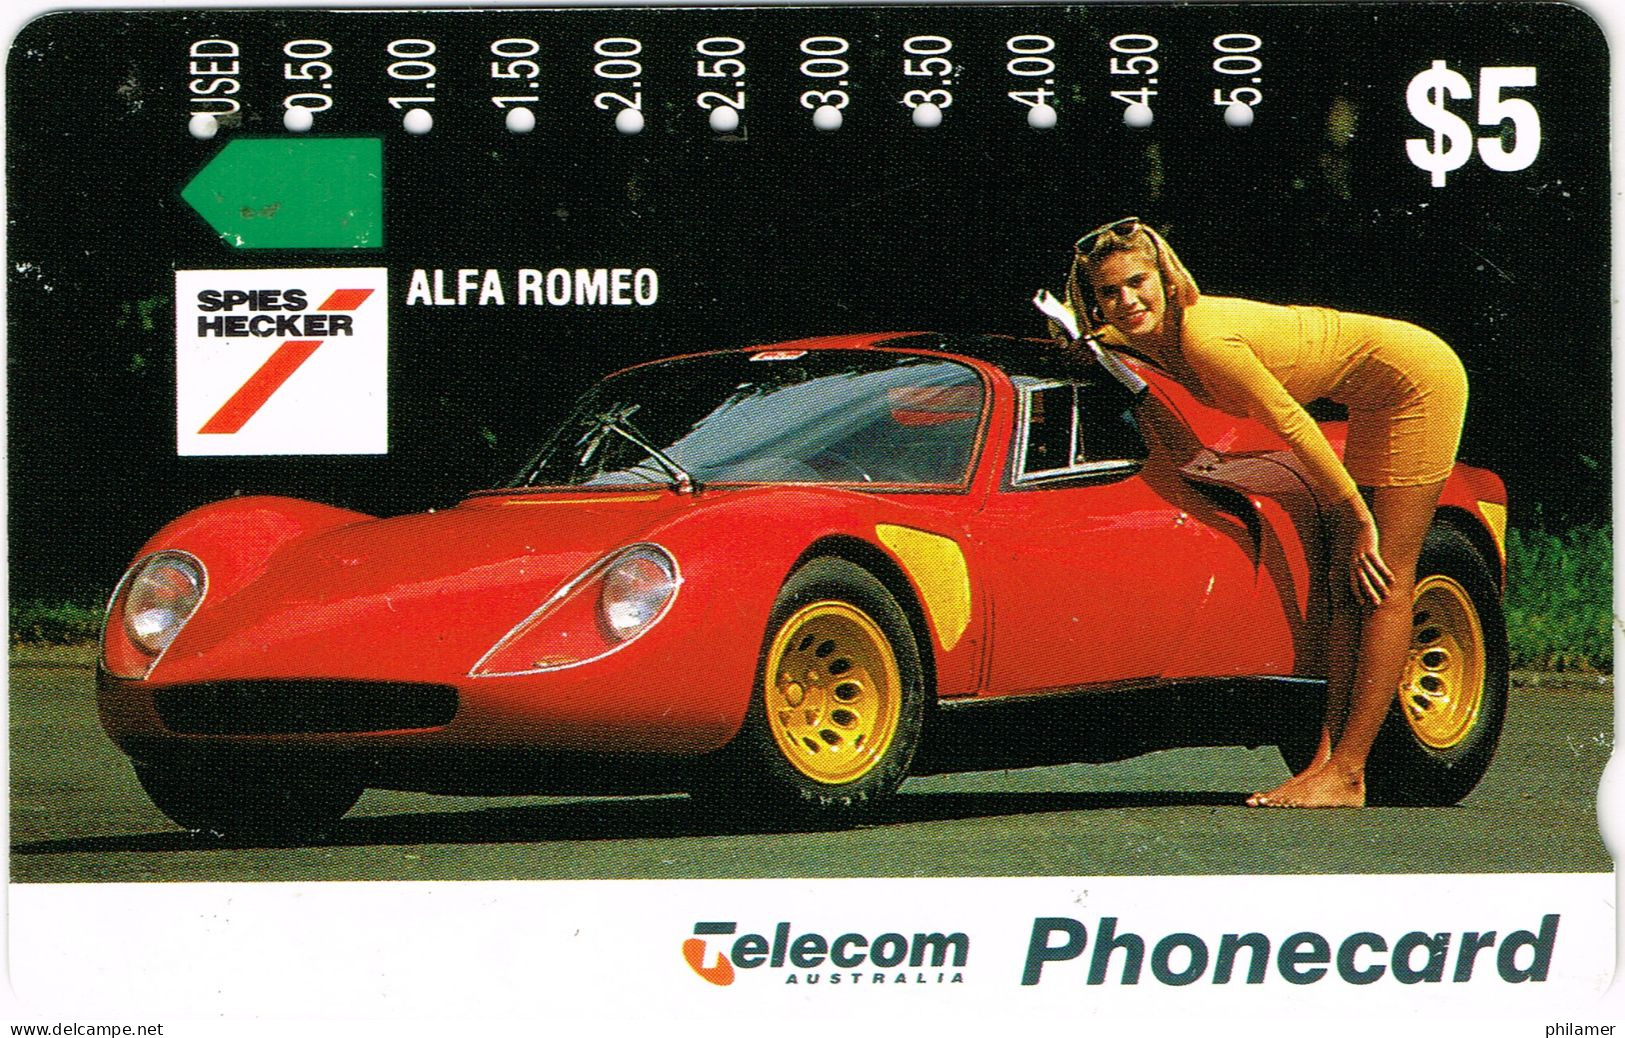 Australie Australia Telecarte Phonecard Carte A Trous Privee Spies Hecker Alfa Romeo Voiture Car 5$ UT  BE - Australia